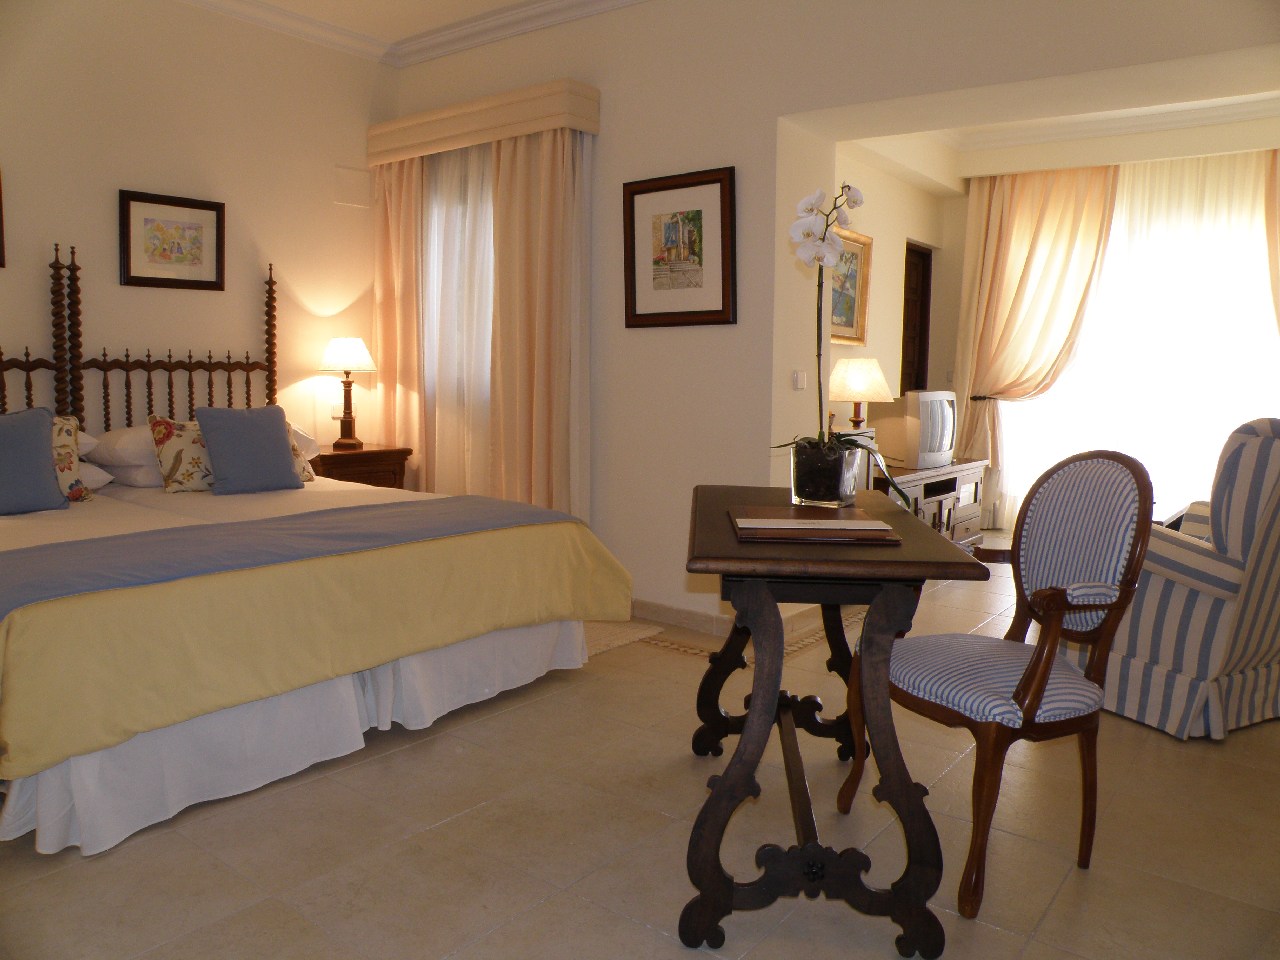 Villa accommodation at Bon Sol hotel, Mallorca